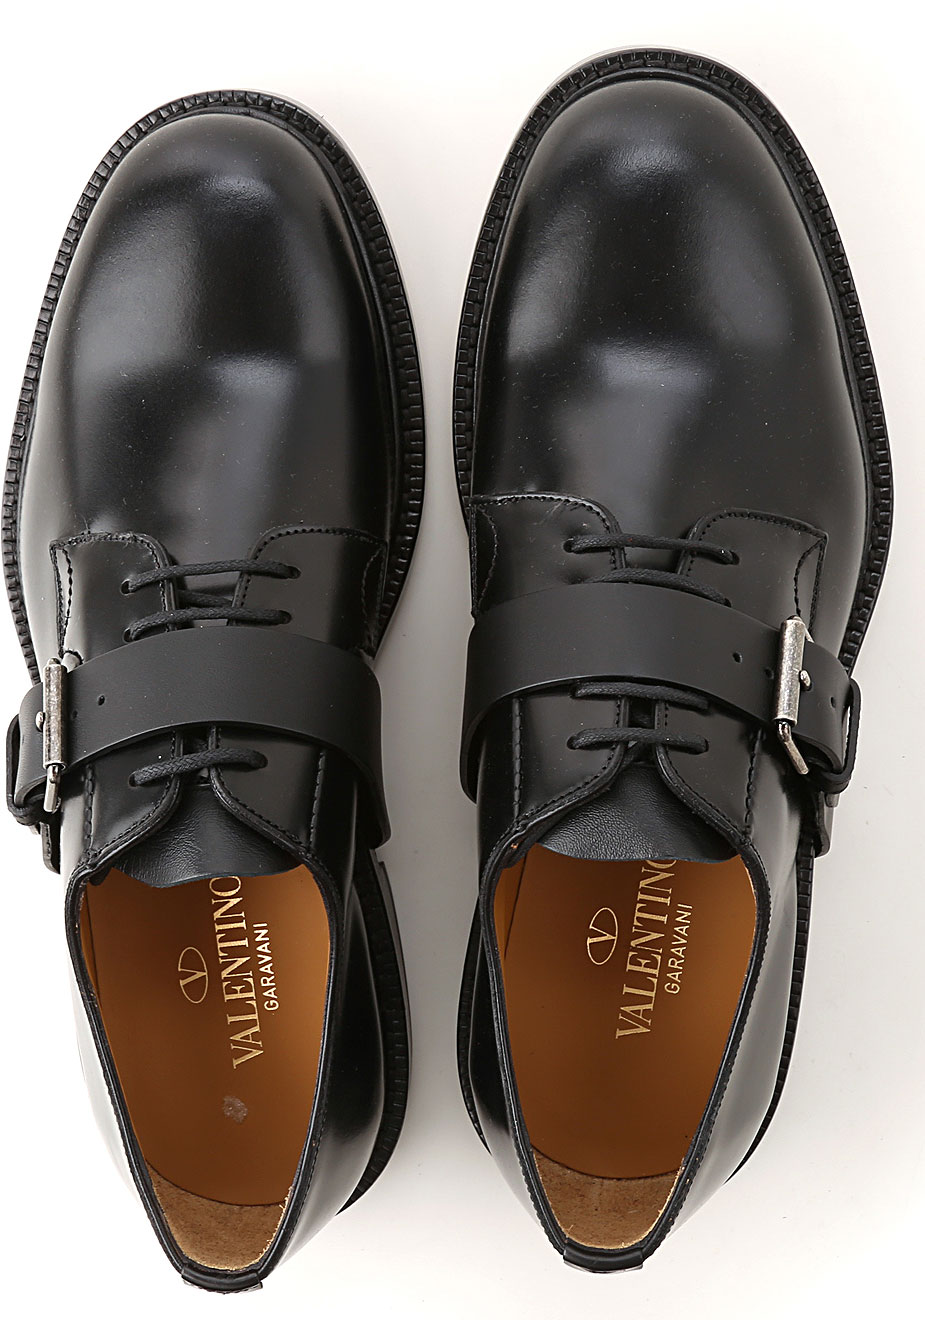 Mens Shoes Valentino Garavani, Style code: ny0s0a23-zvn-0n0